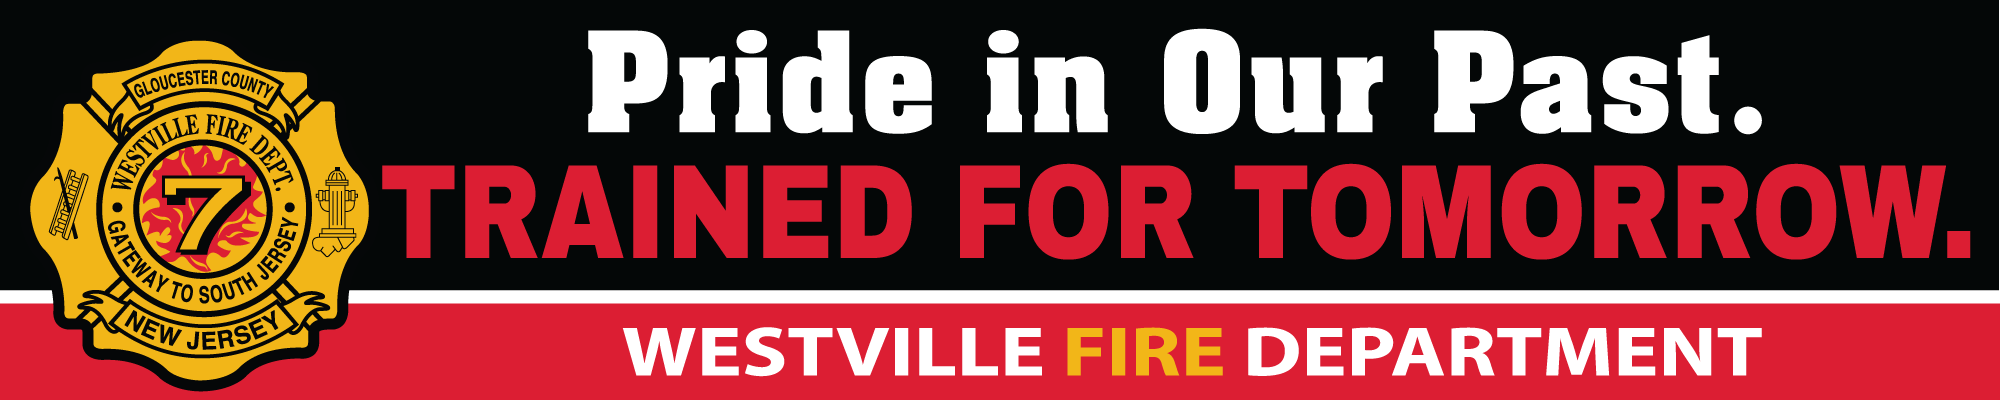 Westville Fire Company